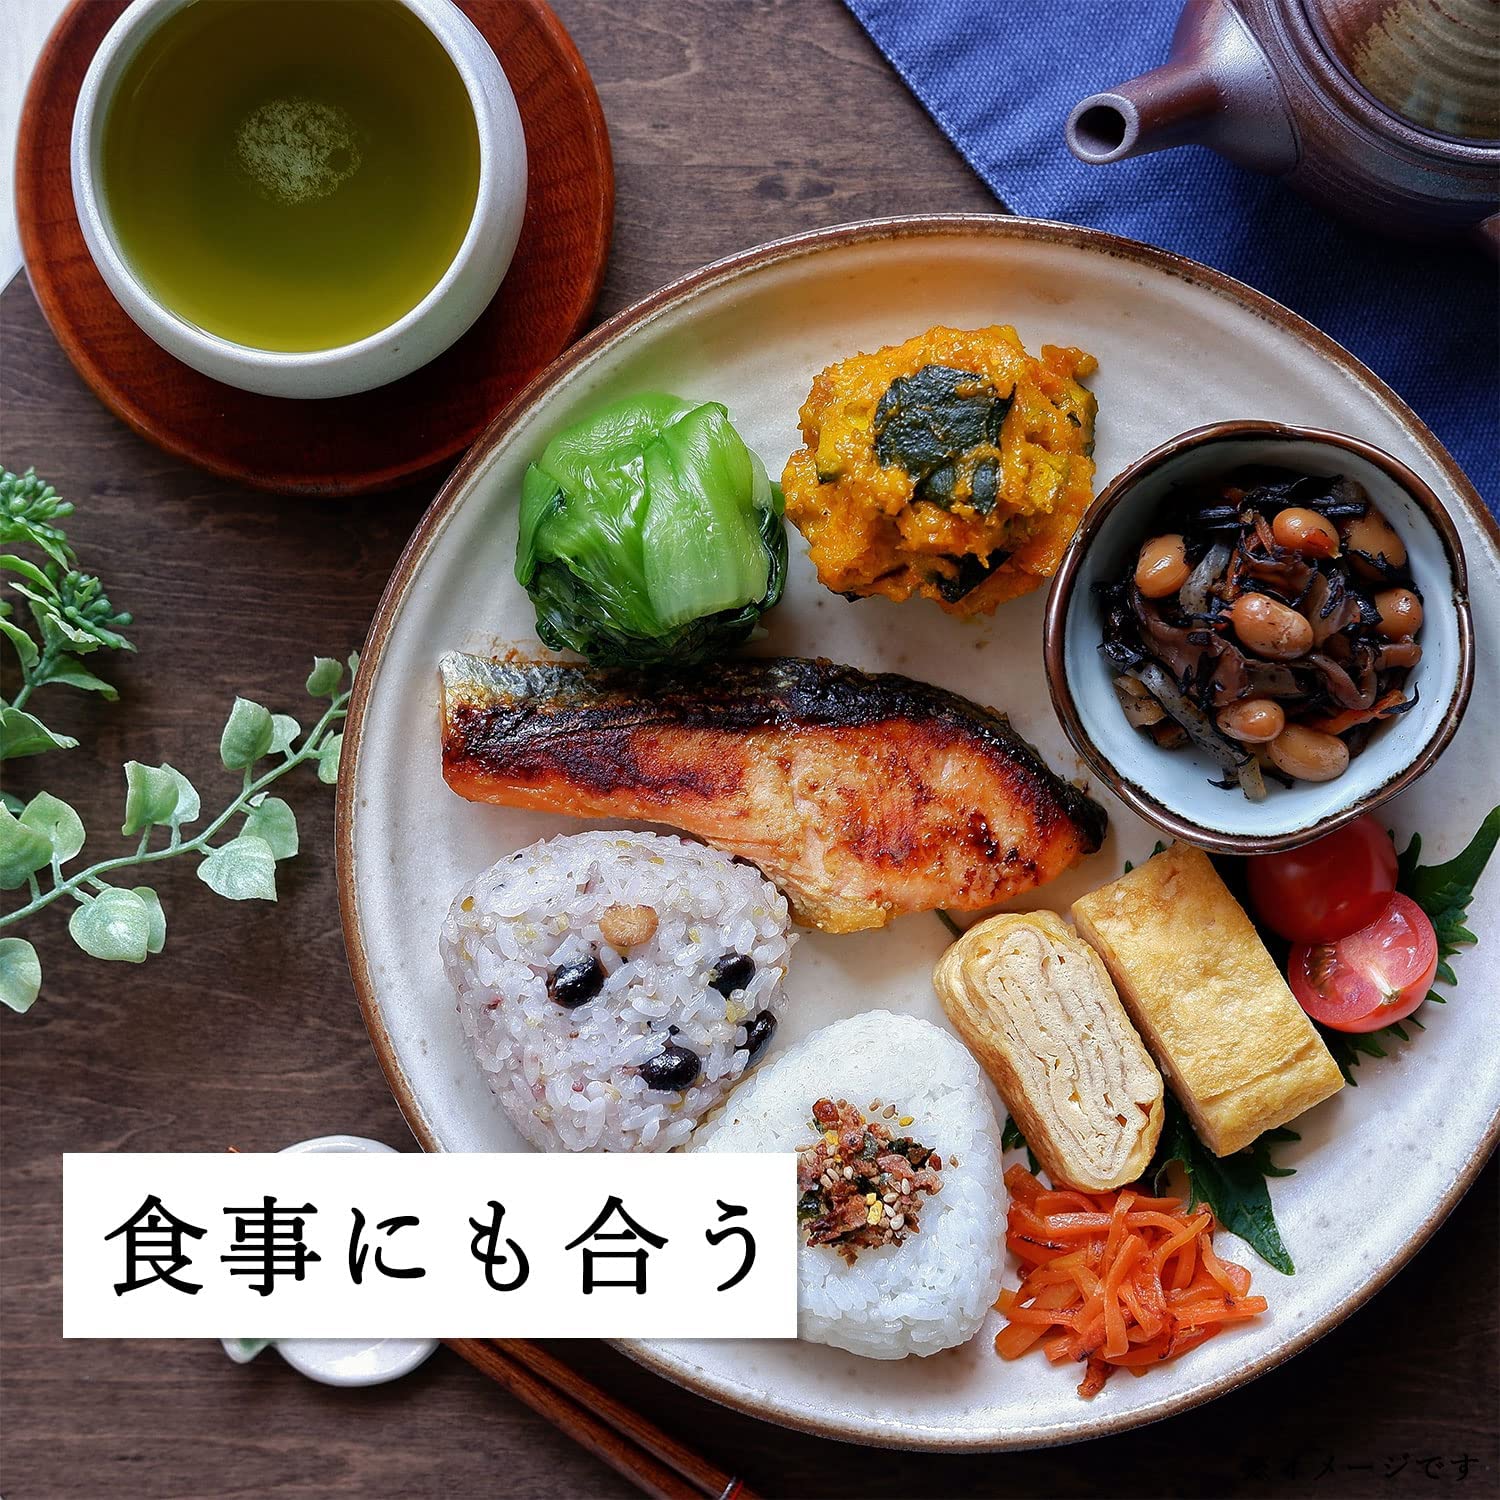 Ito En Ichiban Picked Green Tea 1000 Yutaka Midori Blend [Foods with functional claims] 100g Leaf - NihonMura